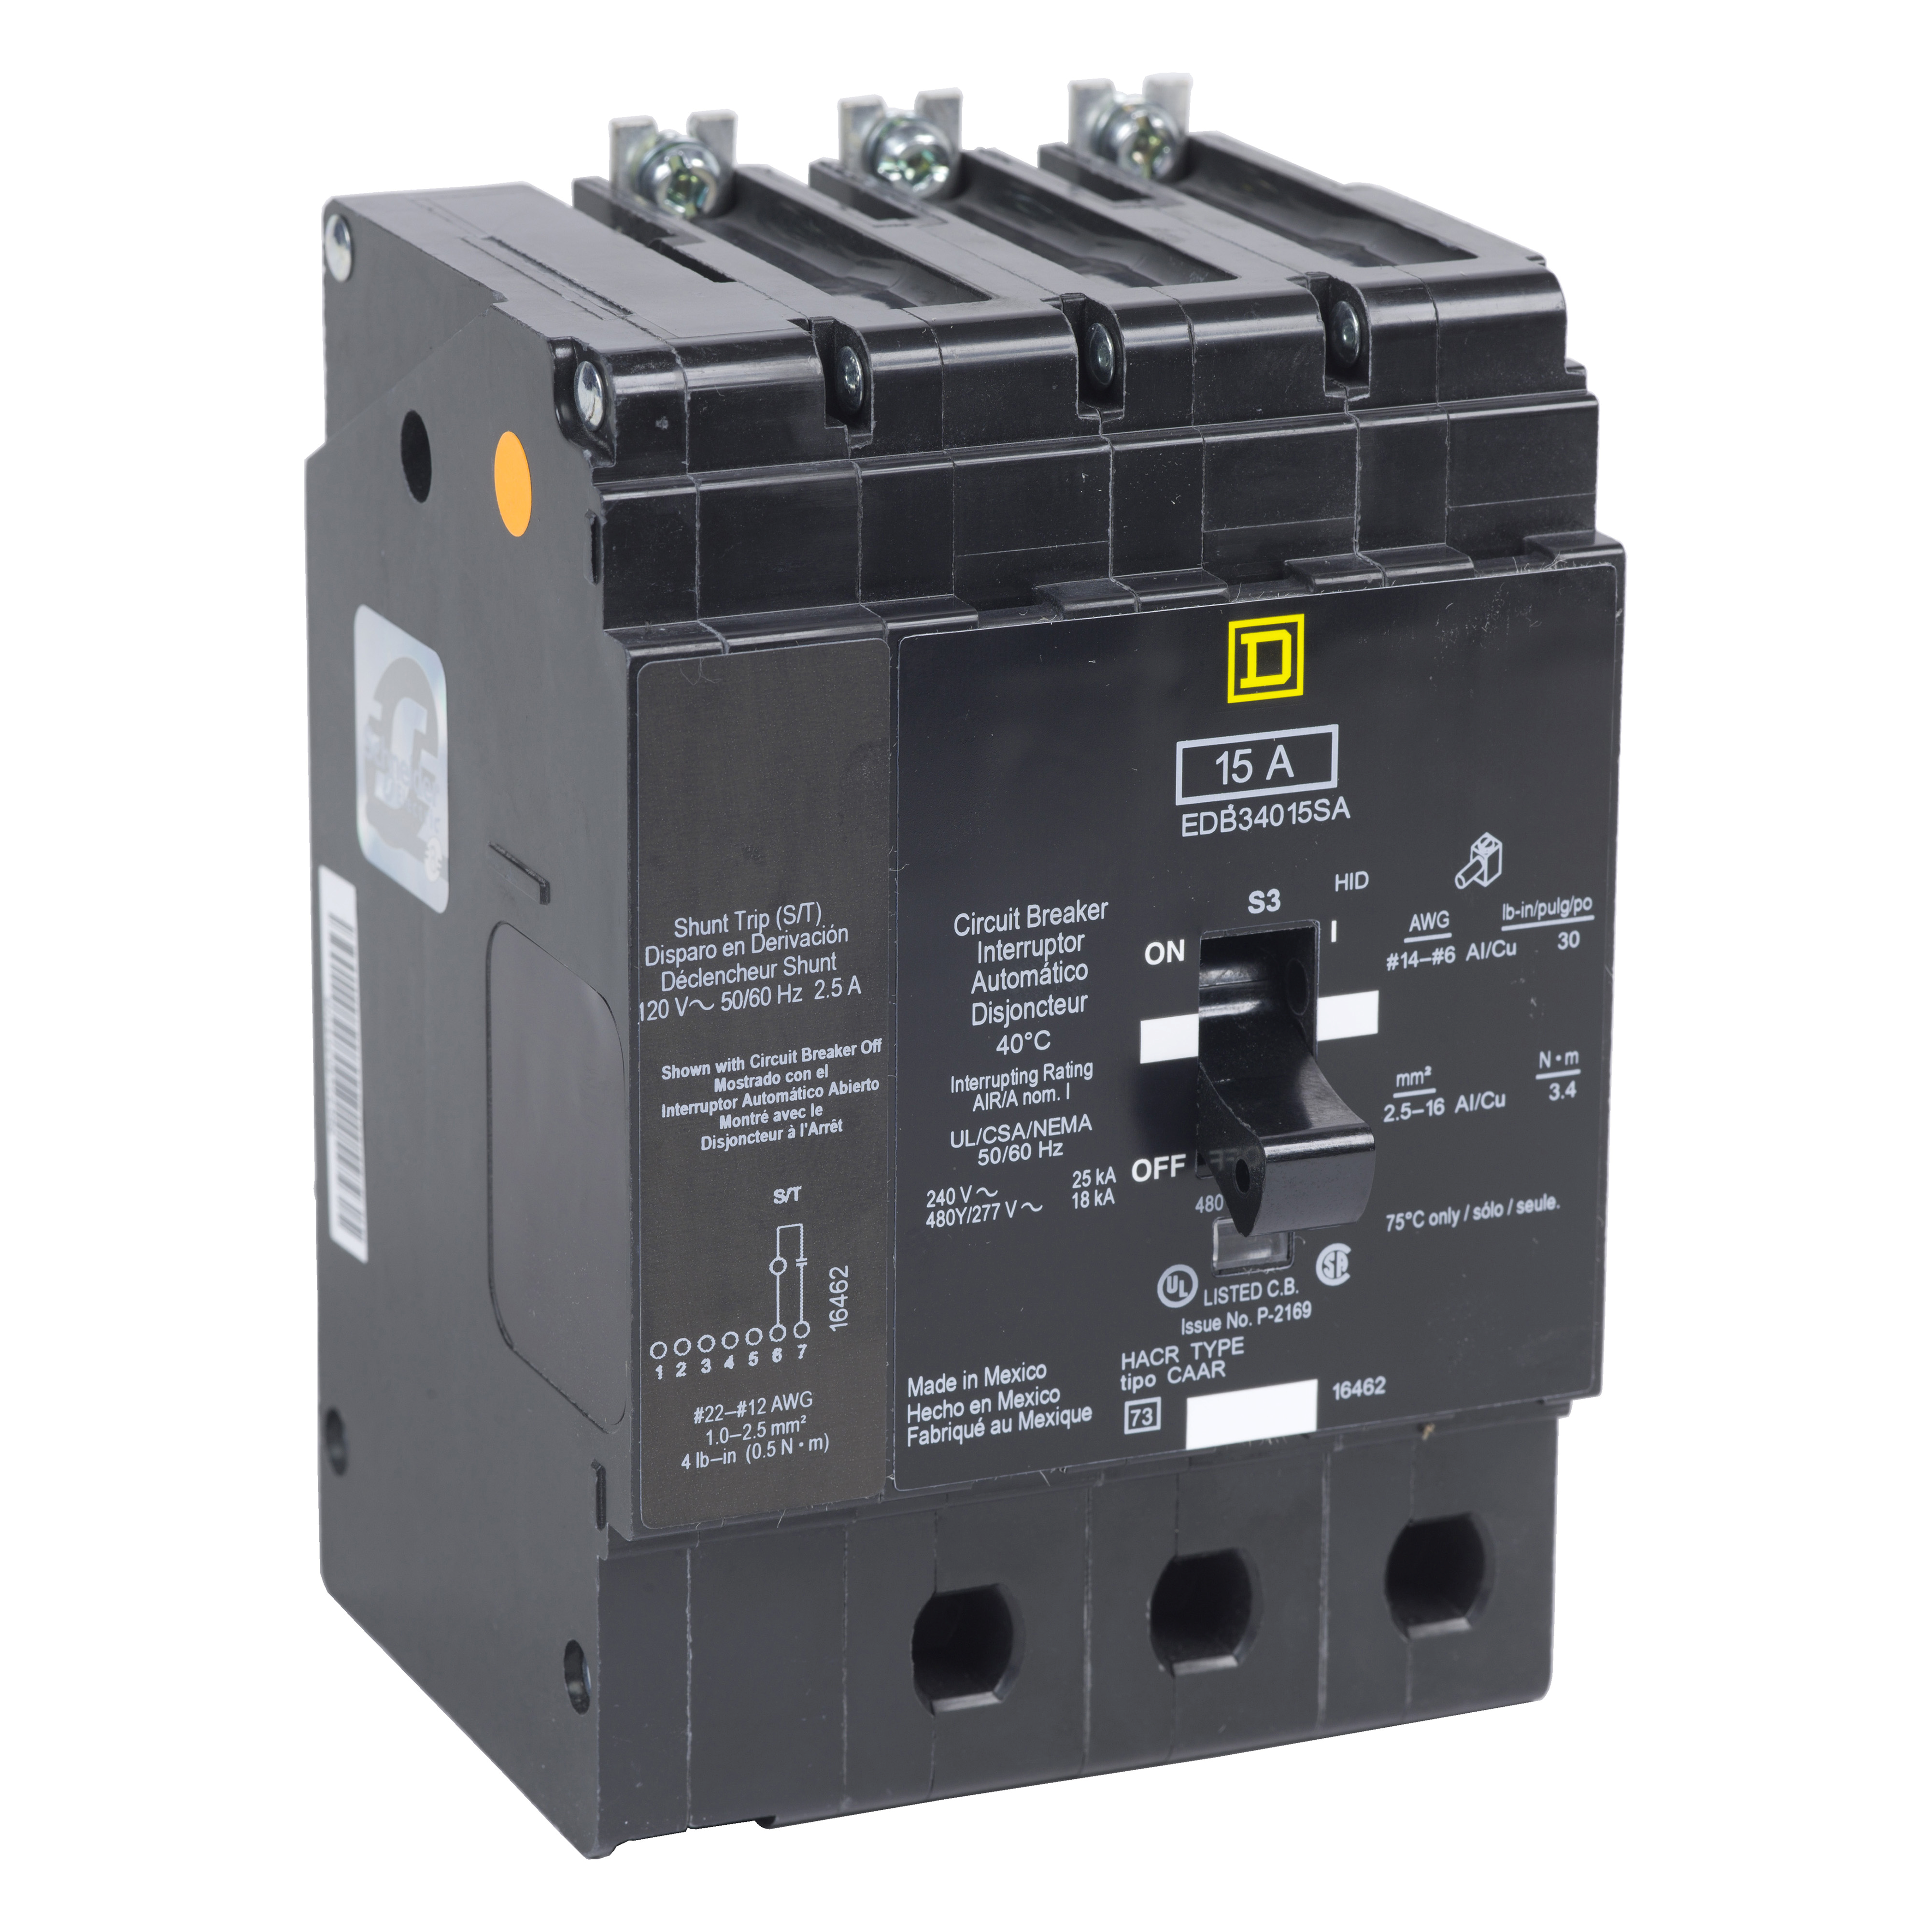 Mini circuit breaker, E-Frame, 15A, 3 pole, 600Y/347 VAC, 25 kA max, bolt on, aux switch, alarm switch, shunt trip